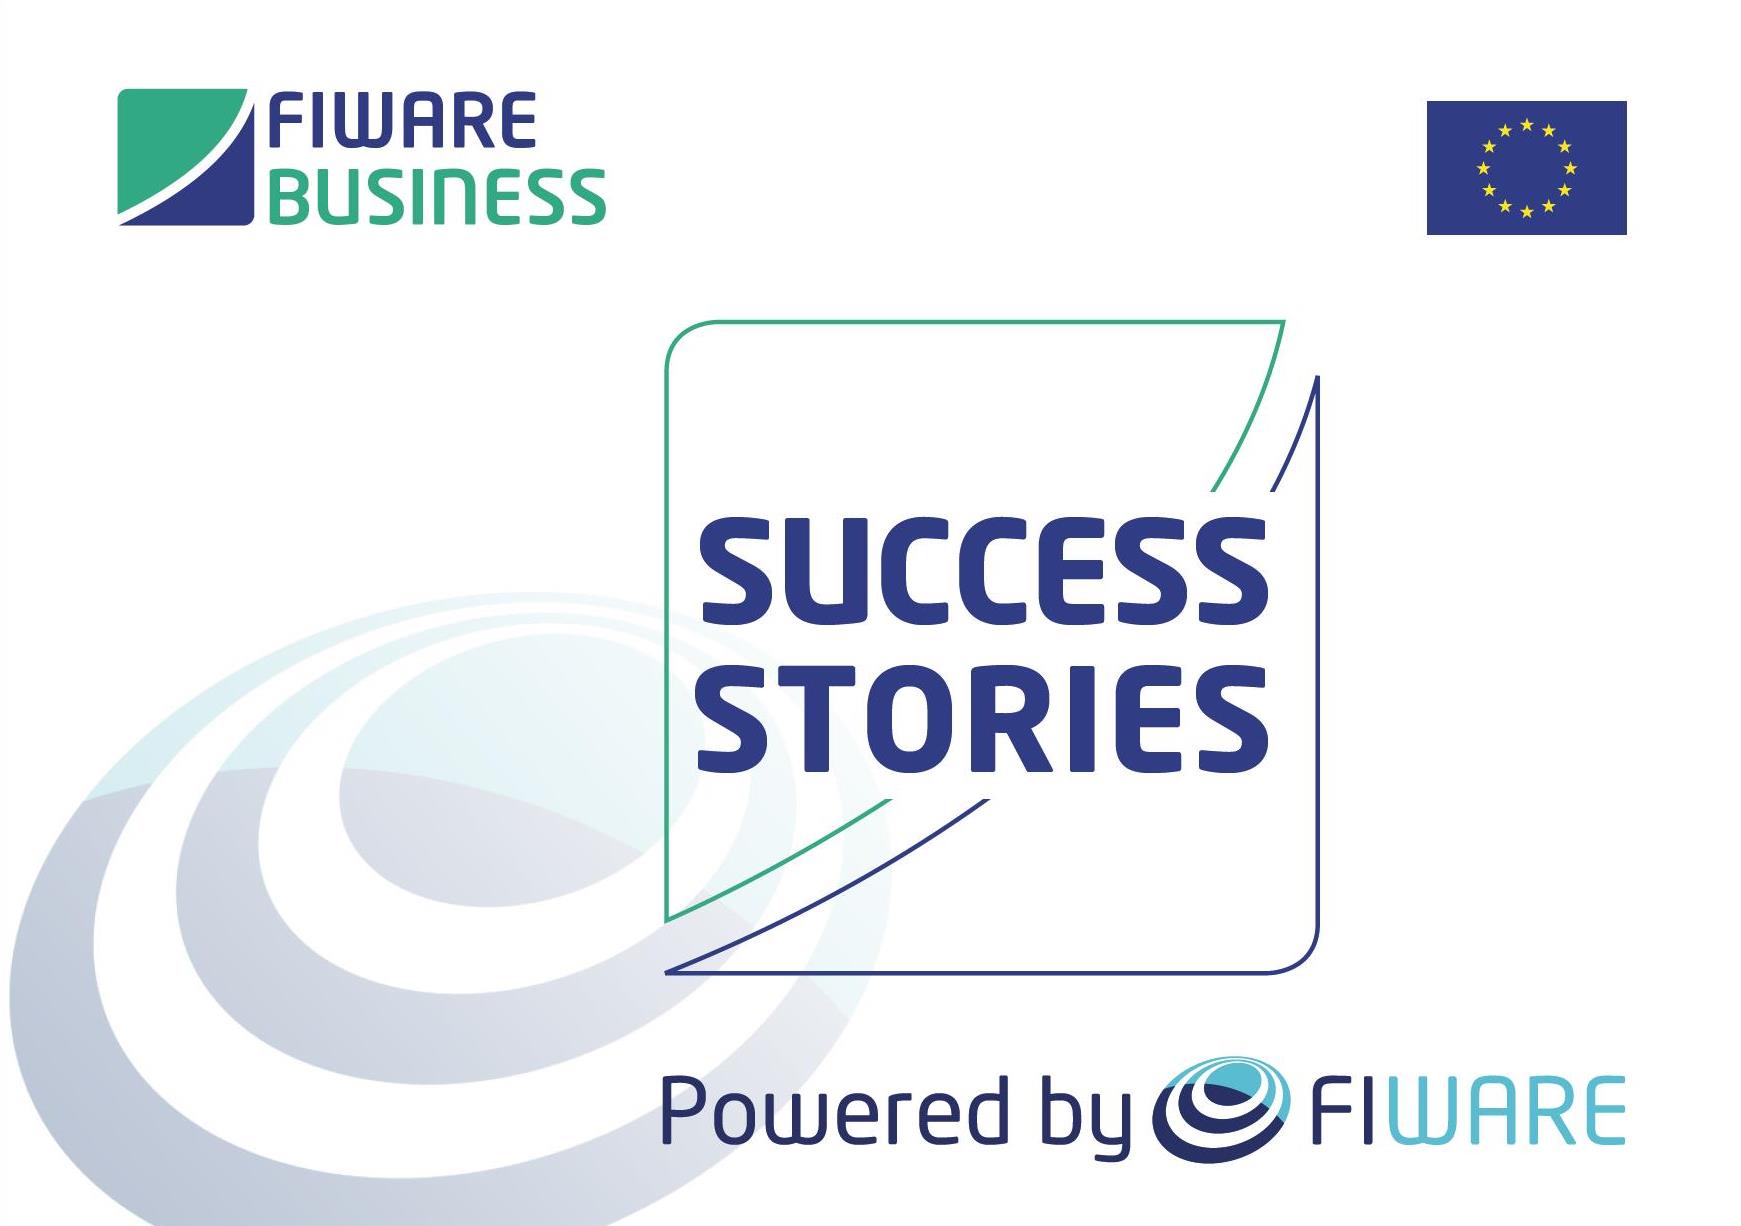 FI-Business-success-stories